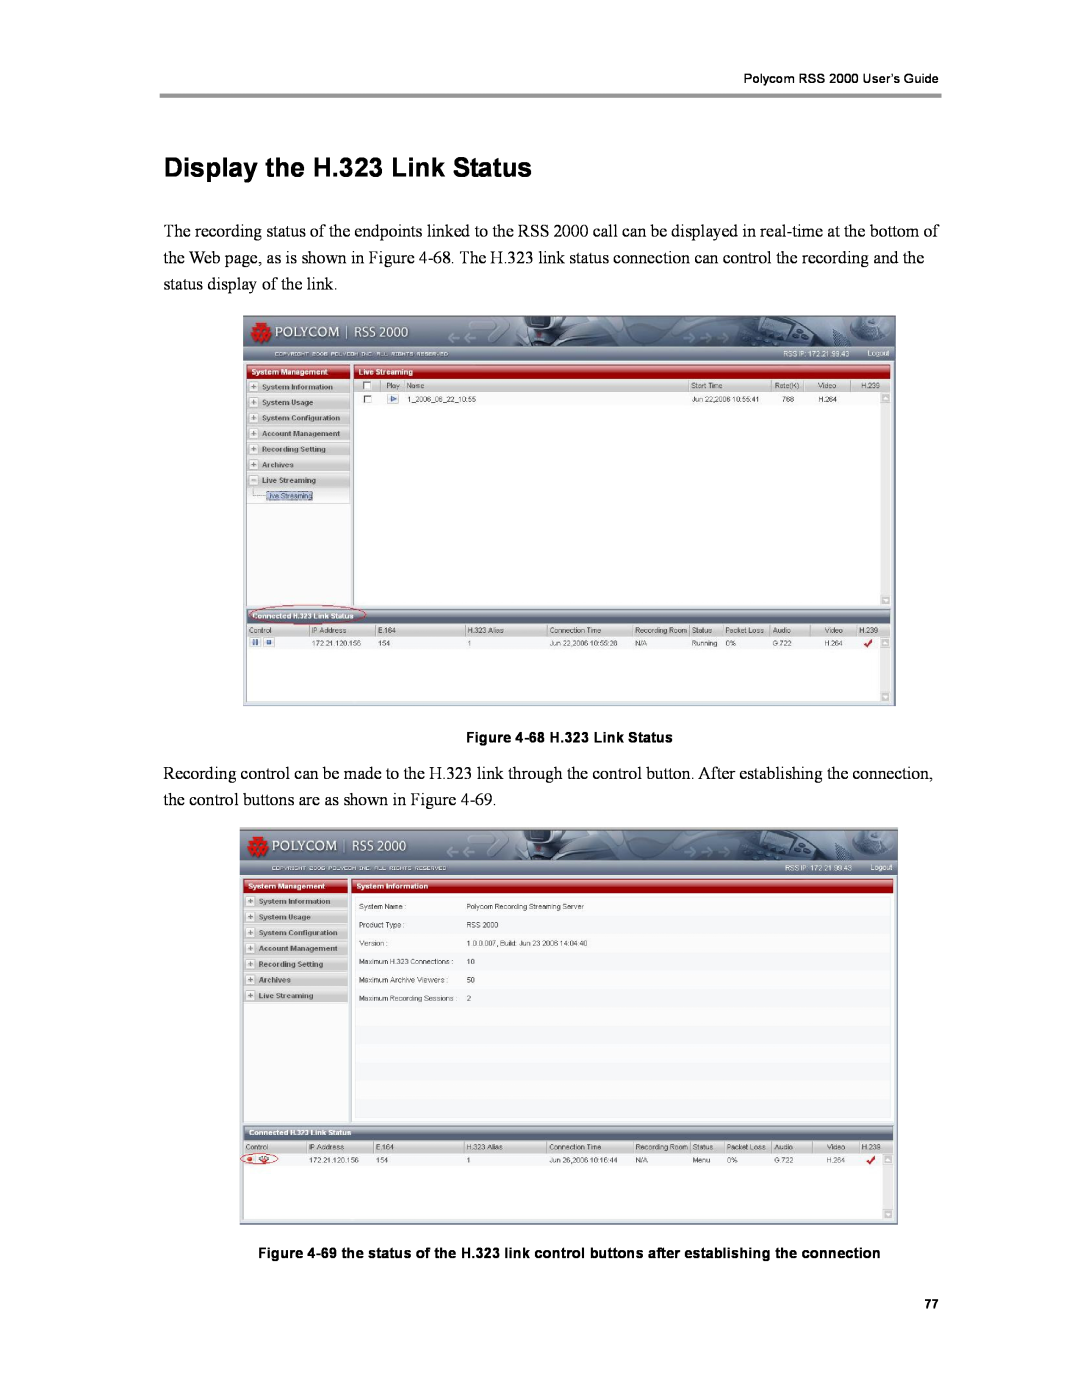 Polycom RSS 2000 manual Display the H.323 Link Status, 68 H.323 Link Status 